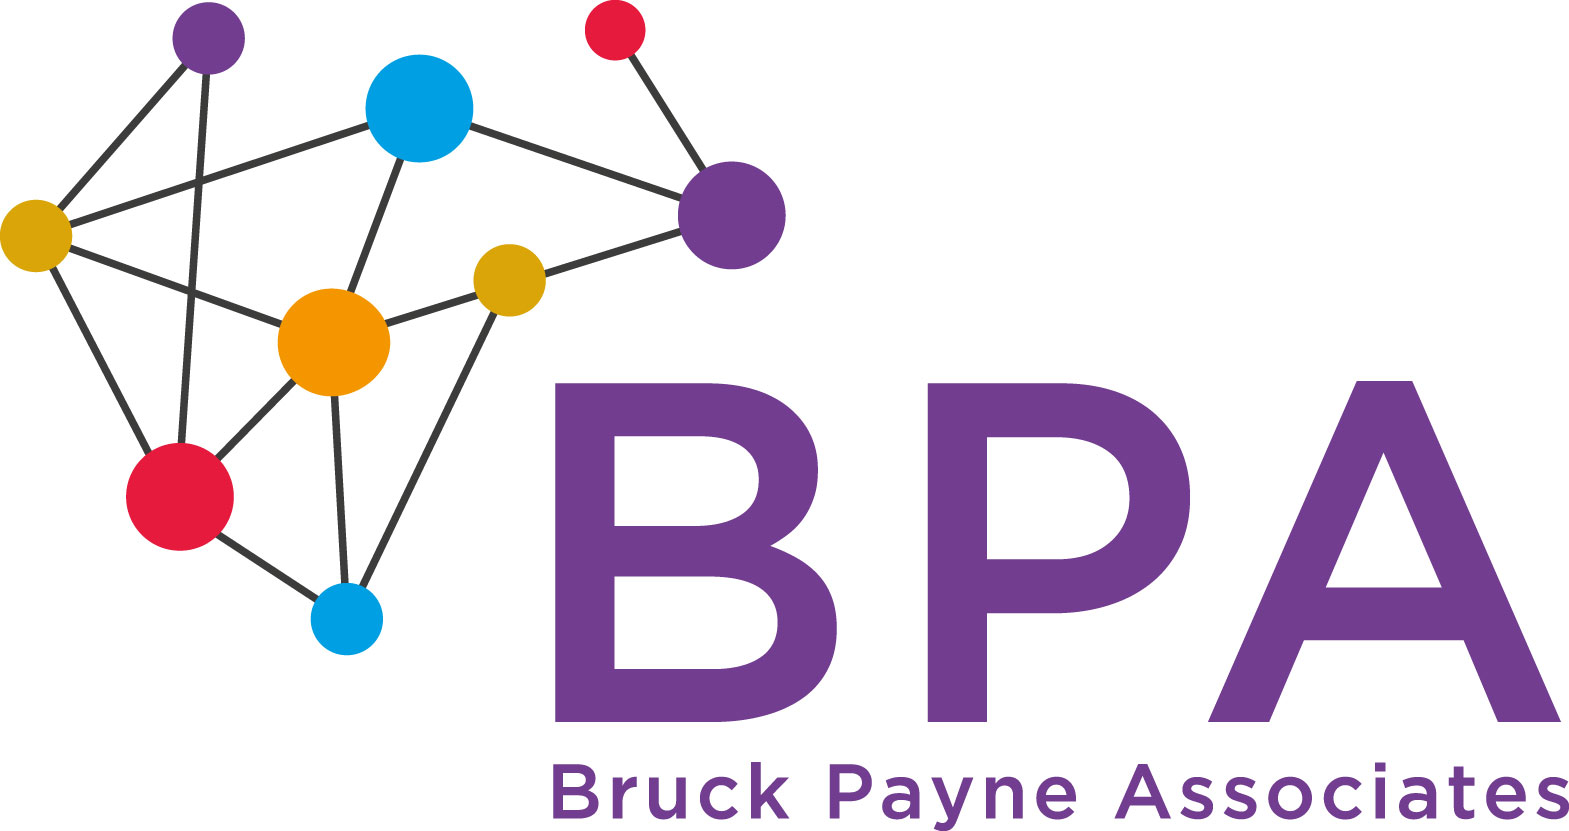 Bruck Payne Associates